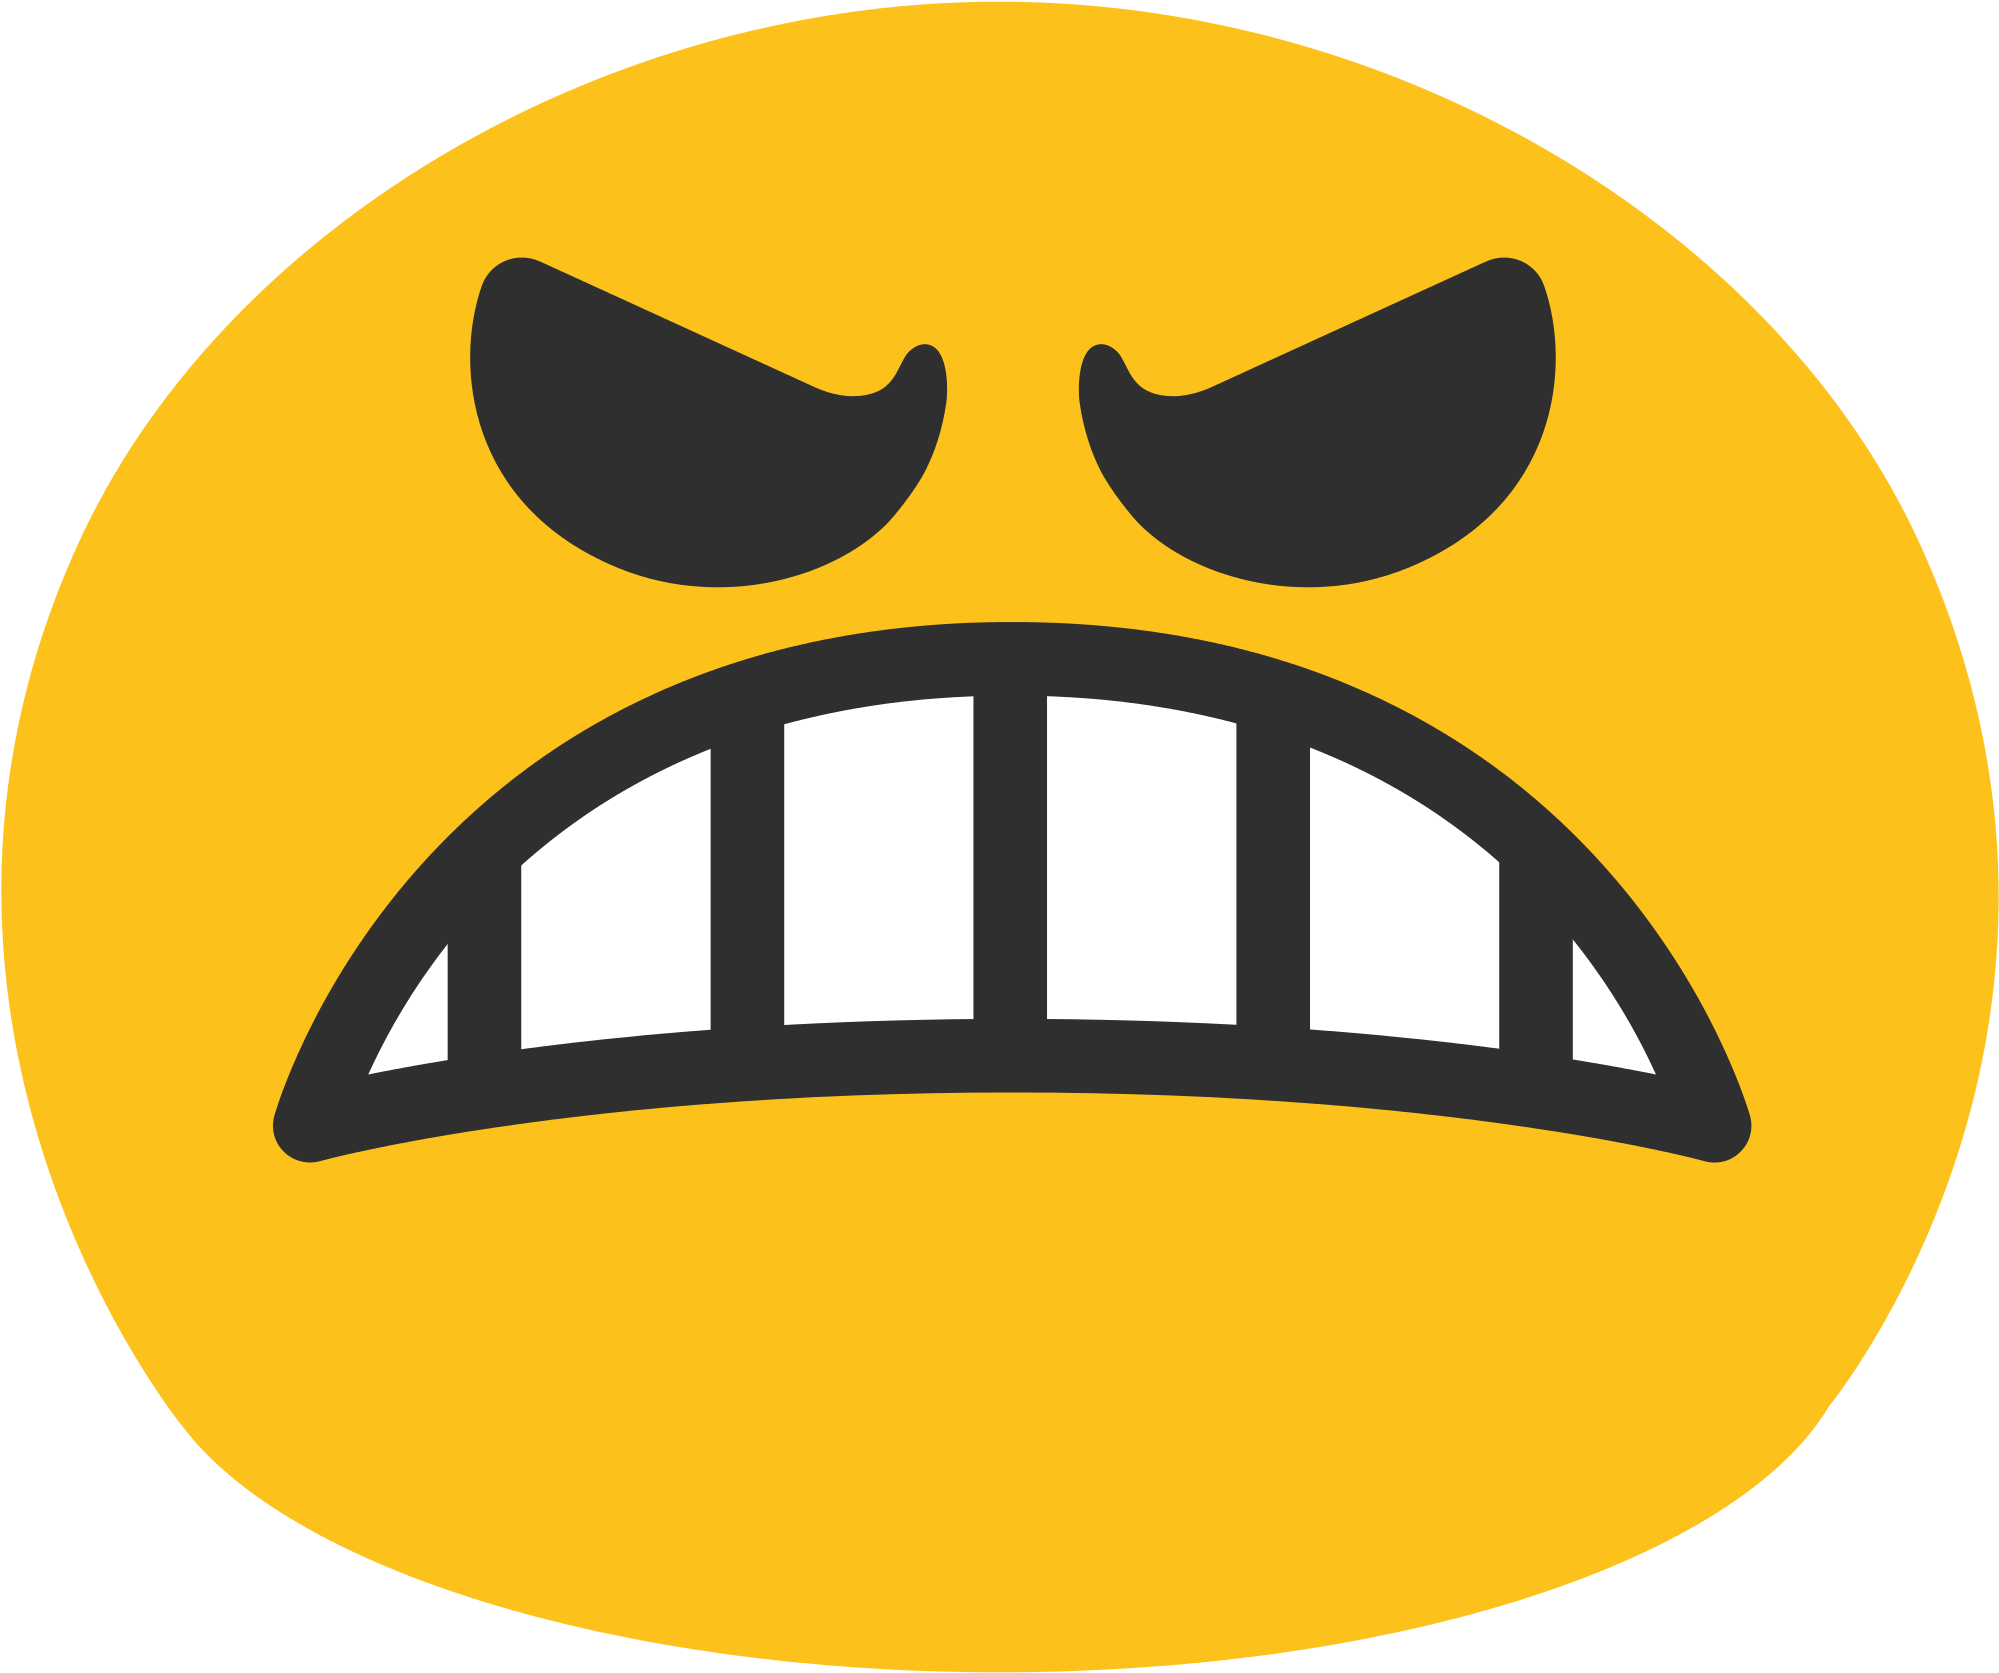 Emoji Angry PNG HD Quality